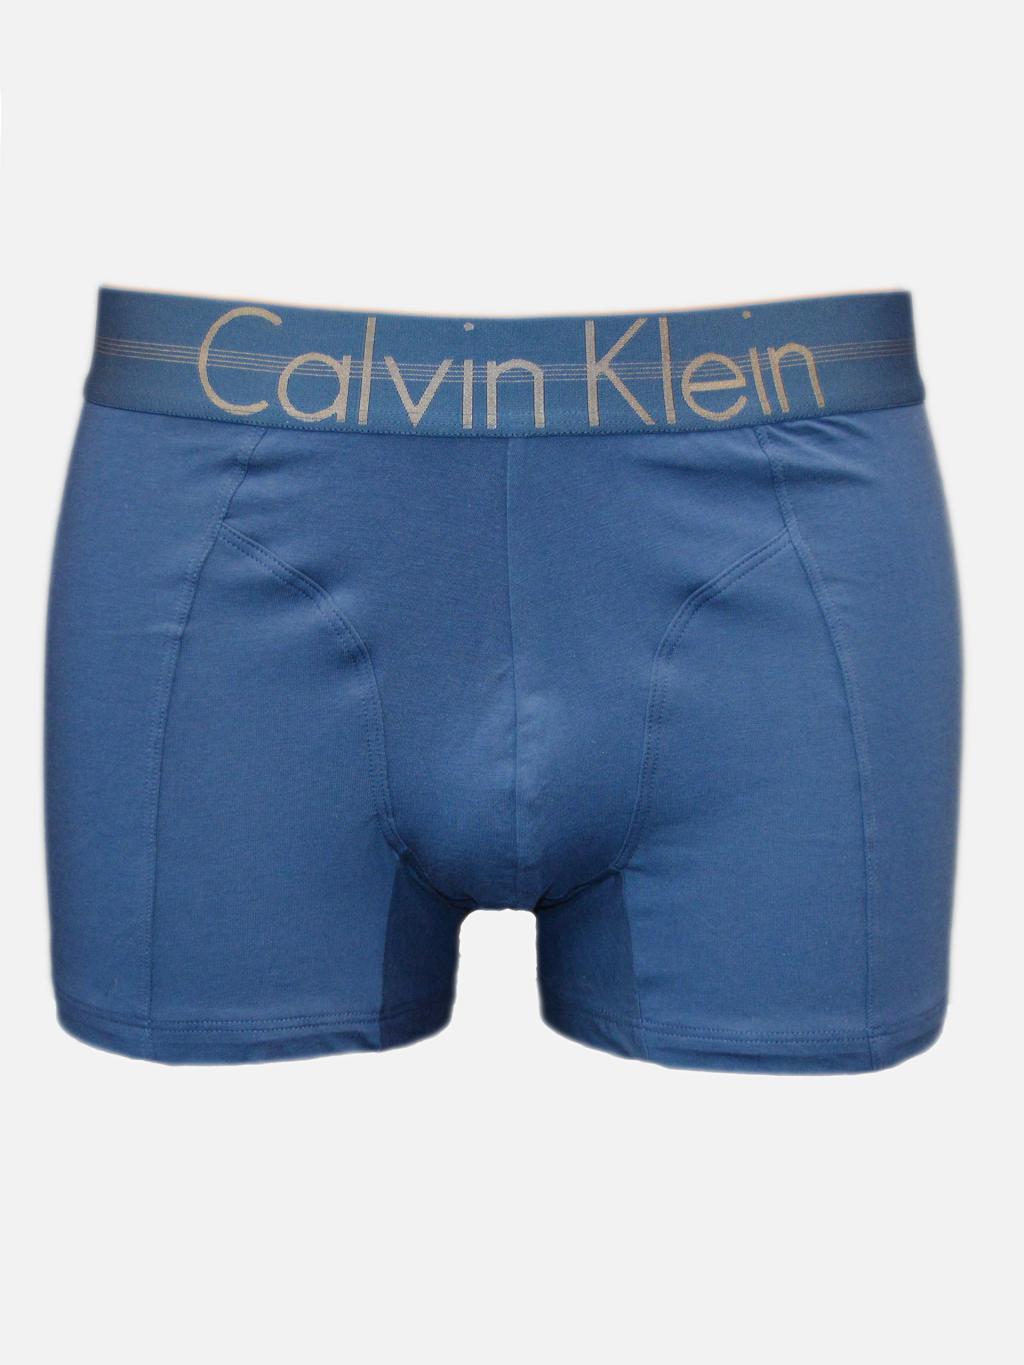 NB1483 - pánské boxerky Calvin Klein Focused fit